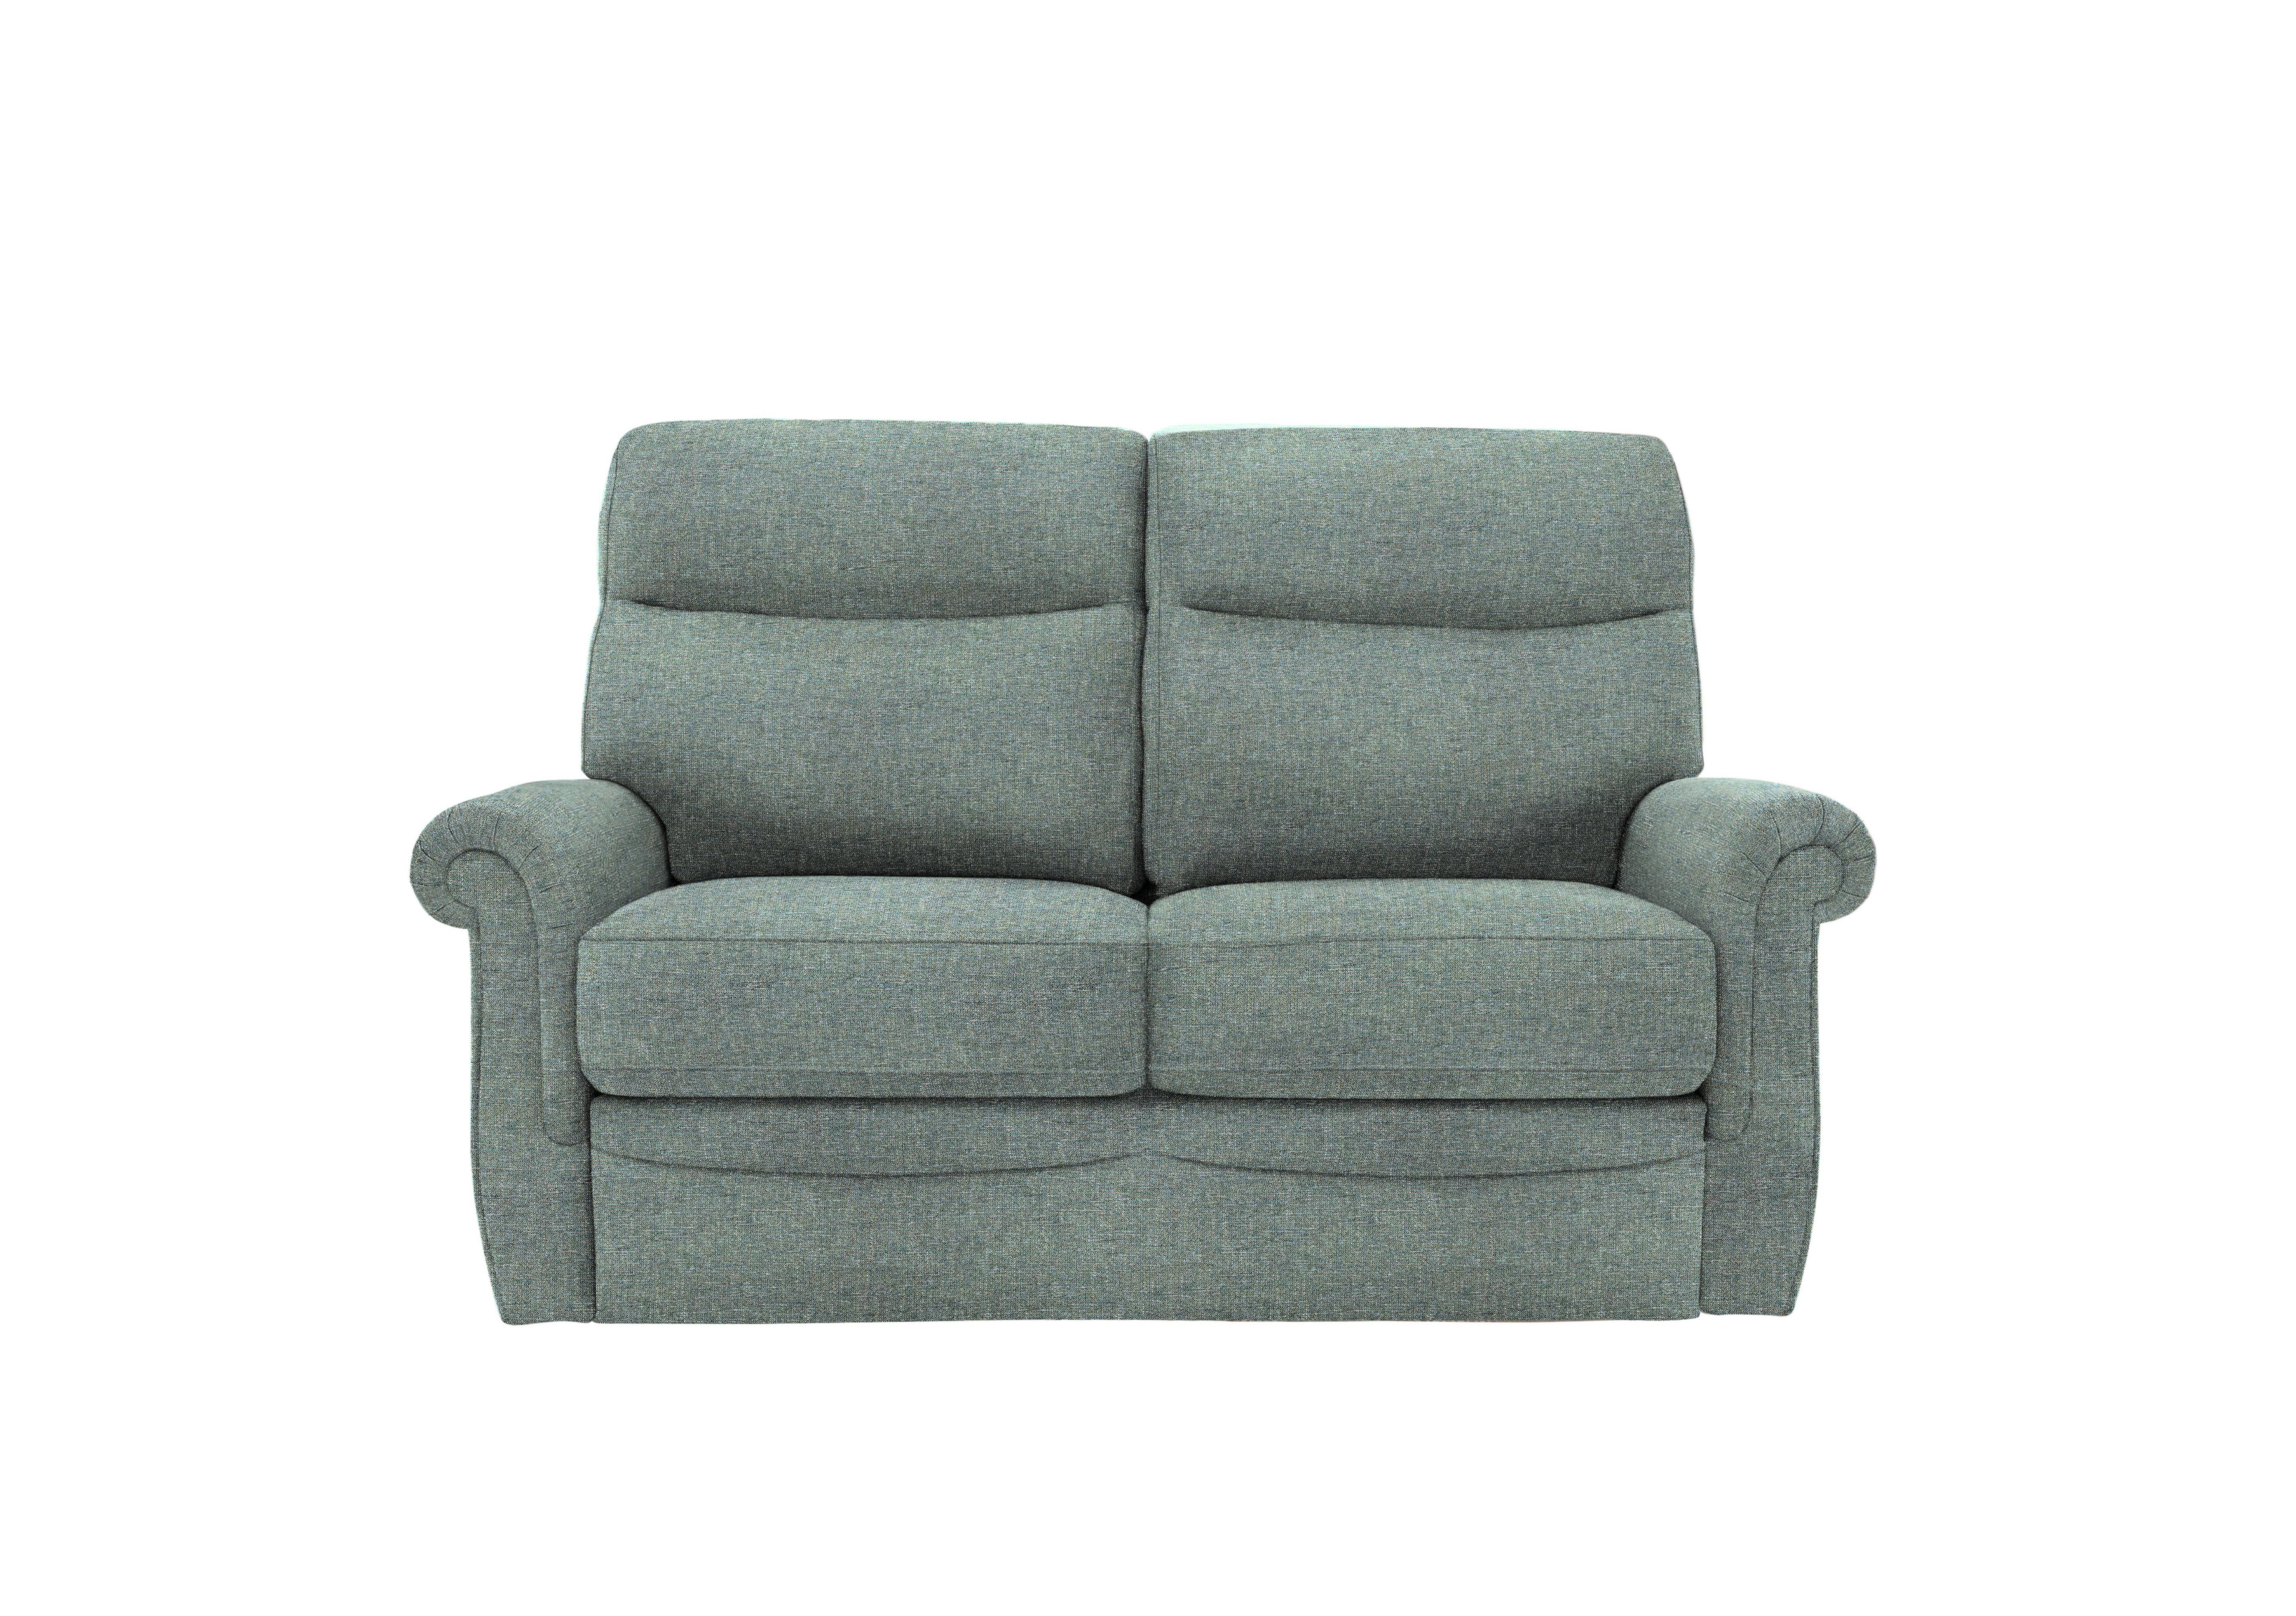 Avon 2 Seater Fabric Sofa in A020 Dapple Kingfisher on Furniture Village